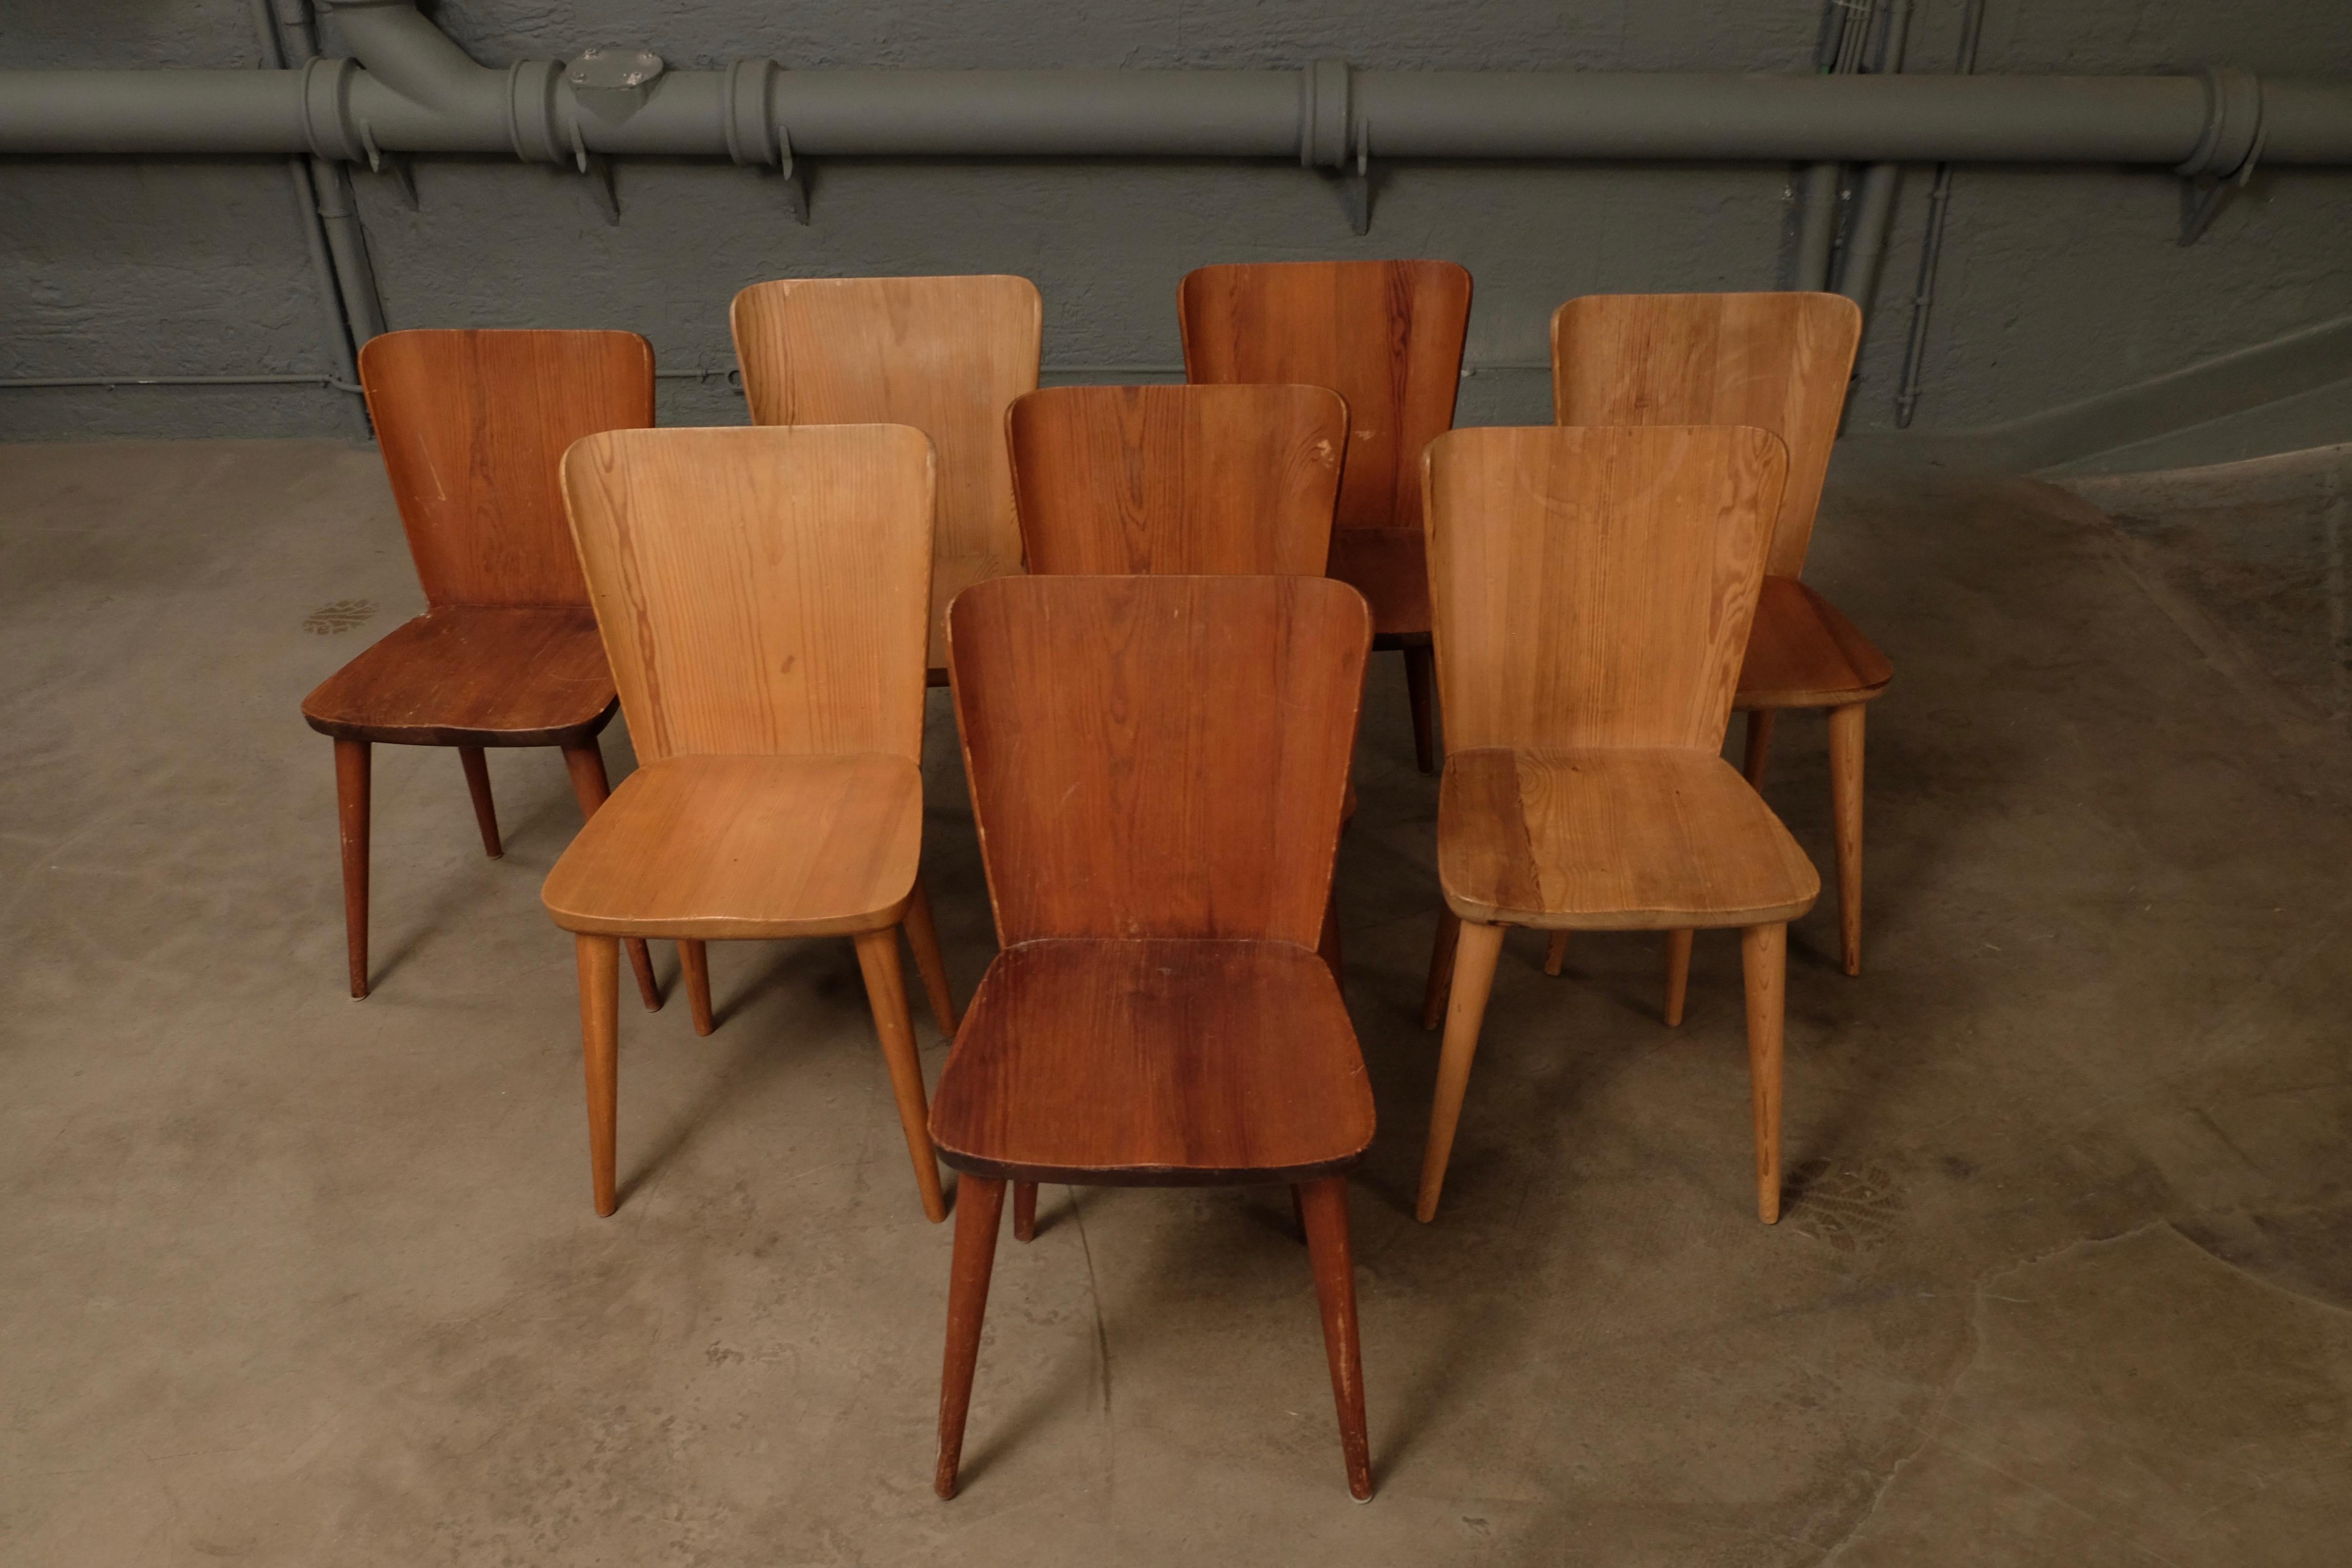 Mid-20th Century Set of 12 Swedish Pine Chairs by Göran Malmvall, Svensk Fur, 1940s